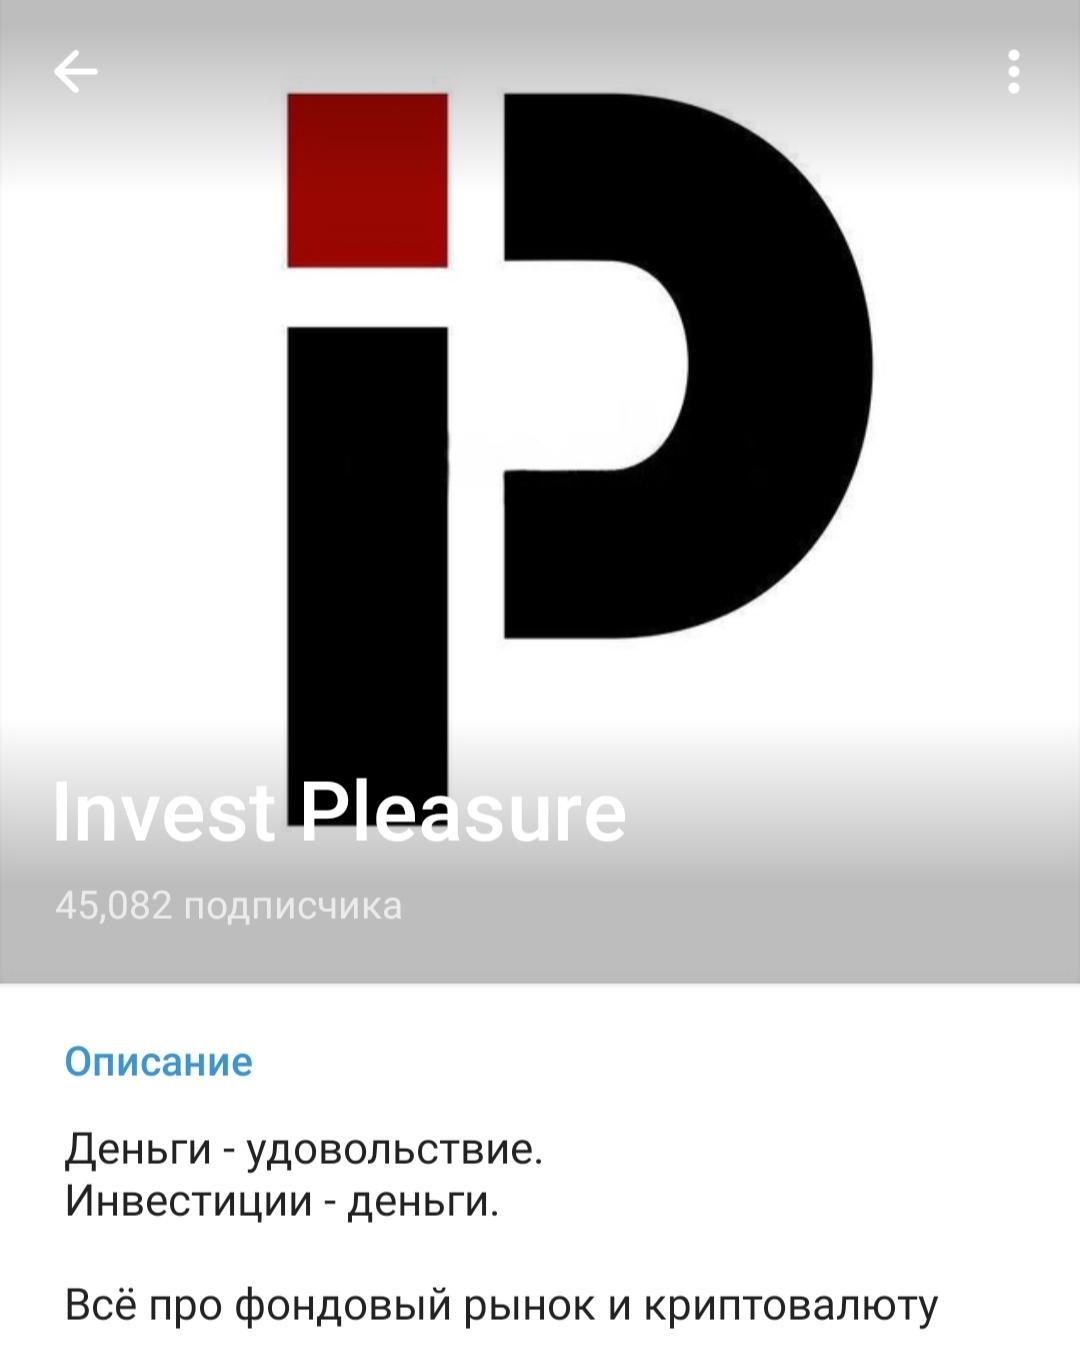 Invest Pleasure телеграм